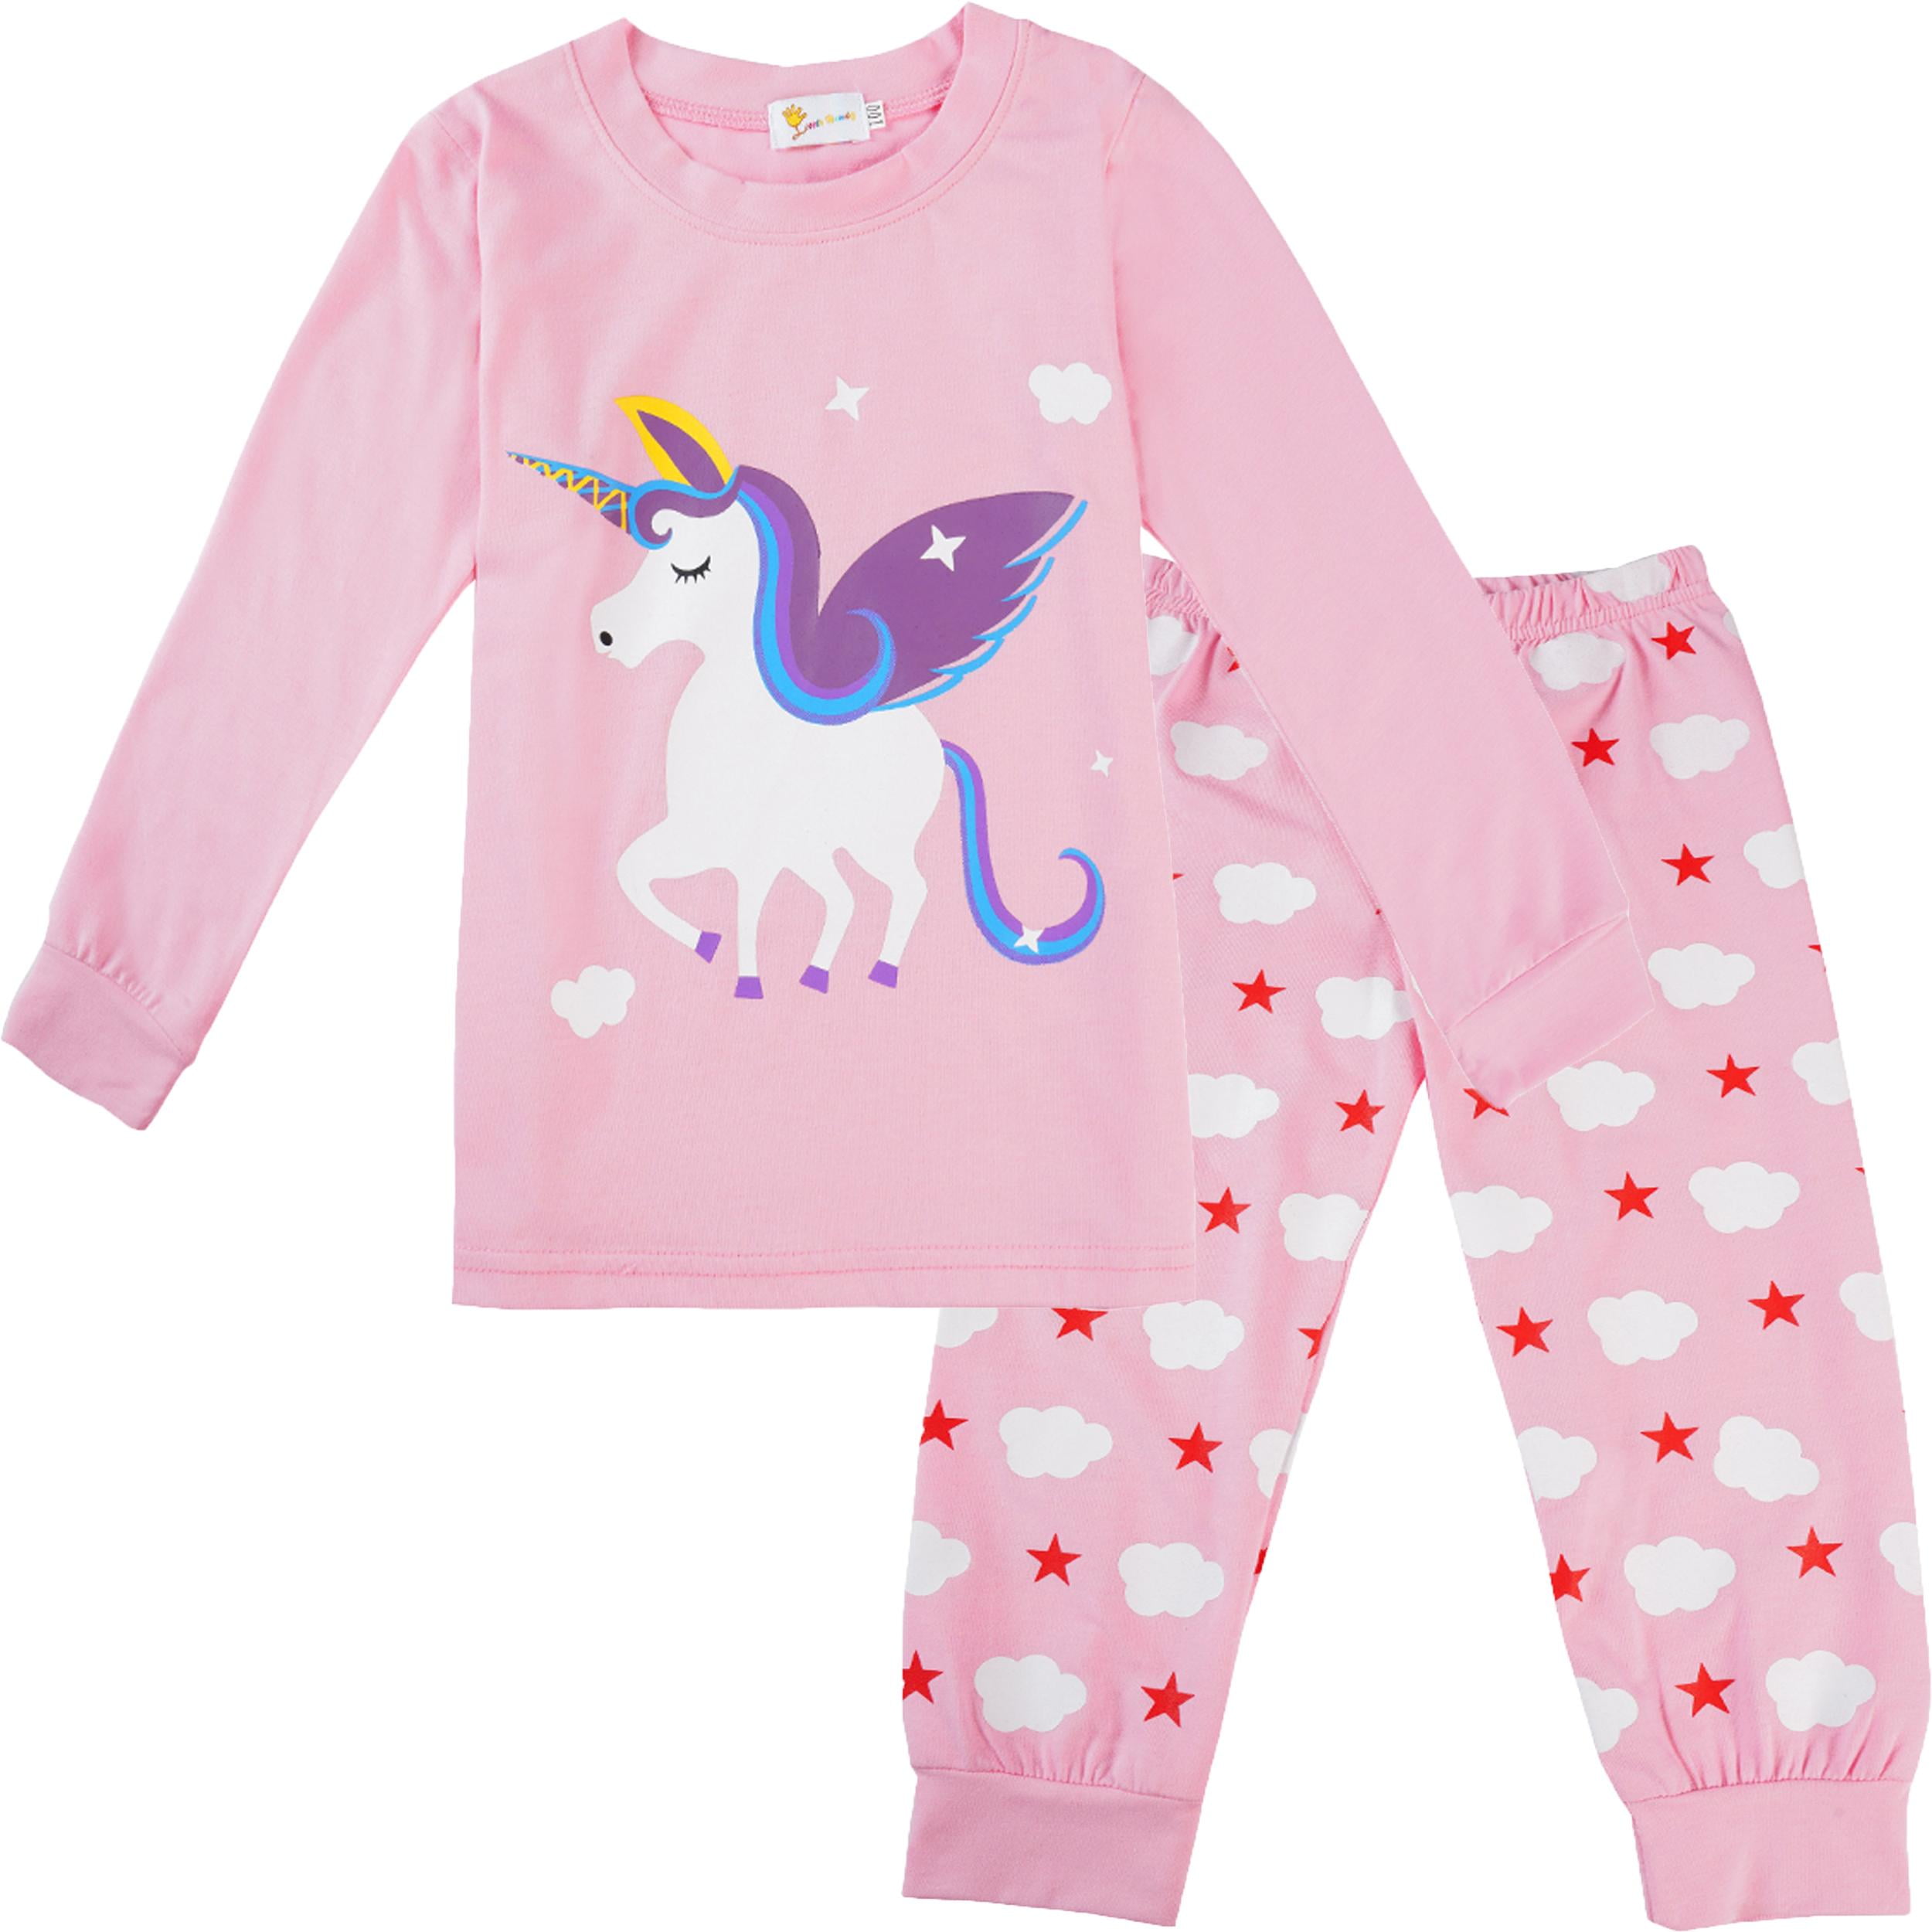 Personalised Its Time to be a Unicorn Pyjamas Toddler Pyjamas Girls Pjs Girls Christmas Gifts Kids Unicorn